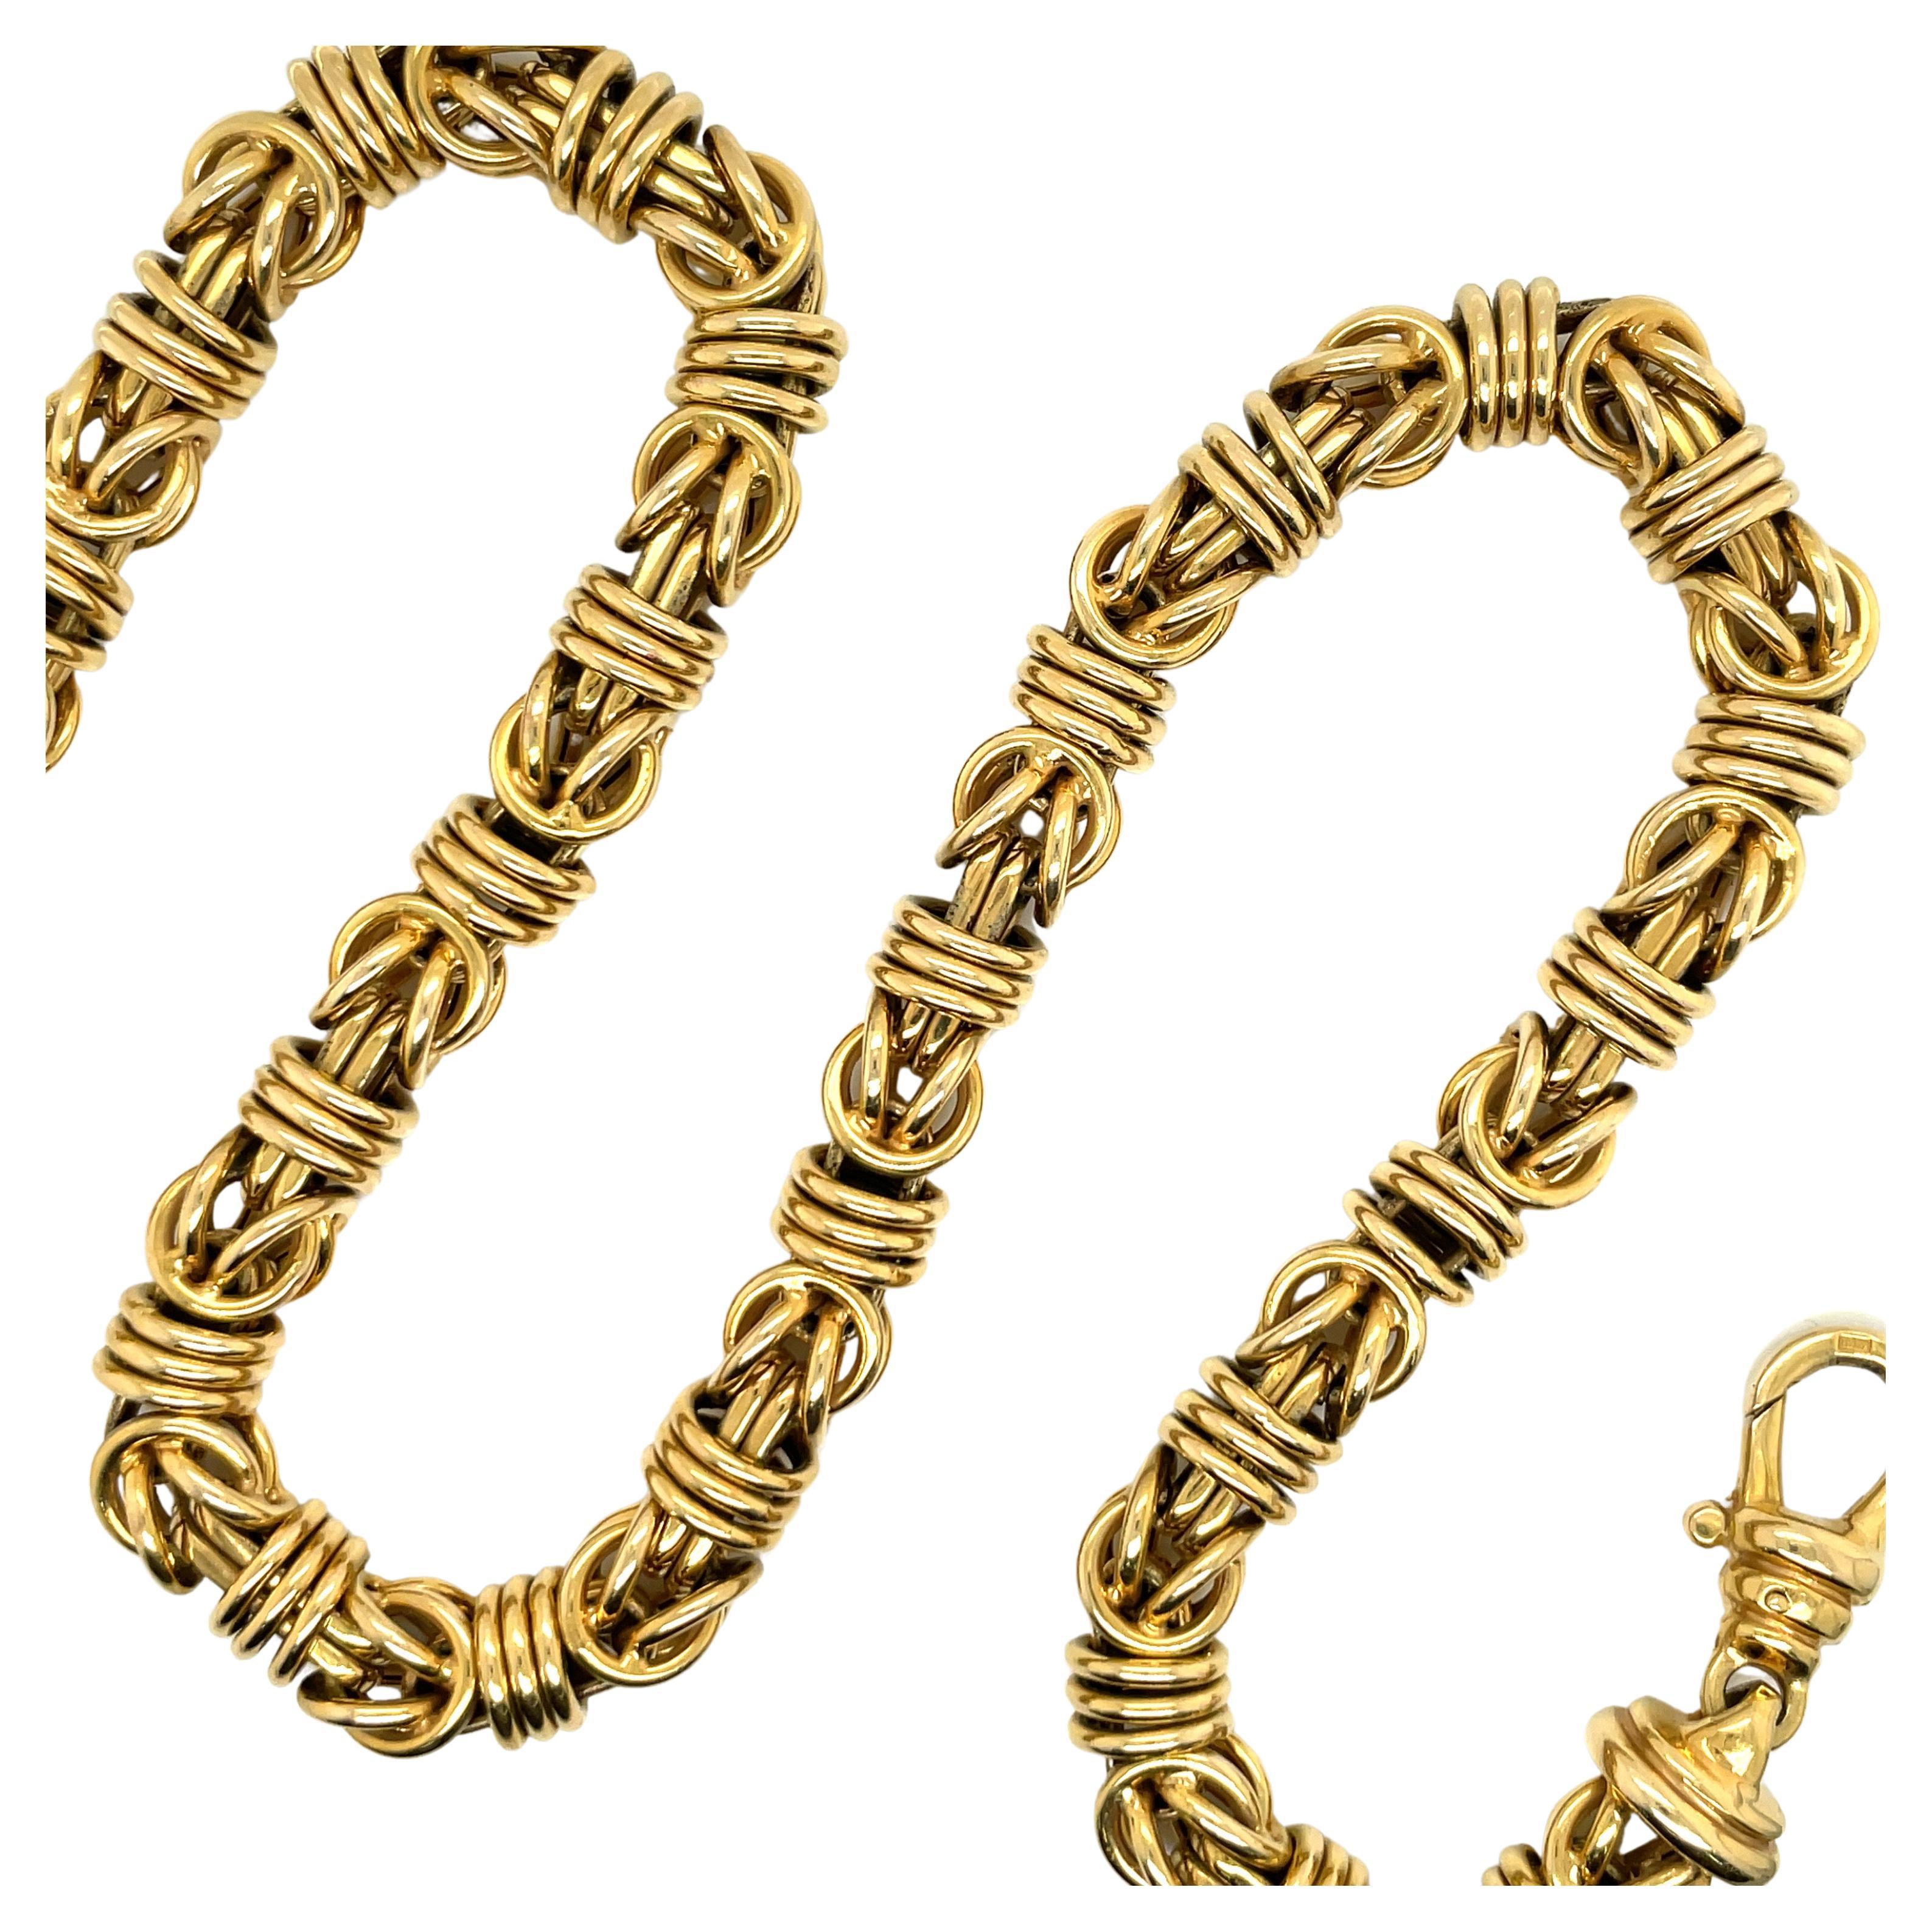 70 gram gold necklace